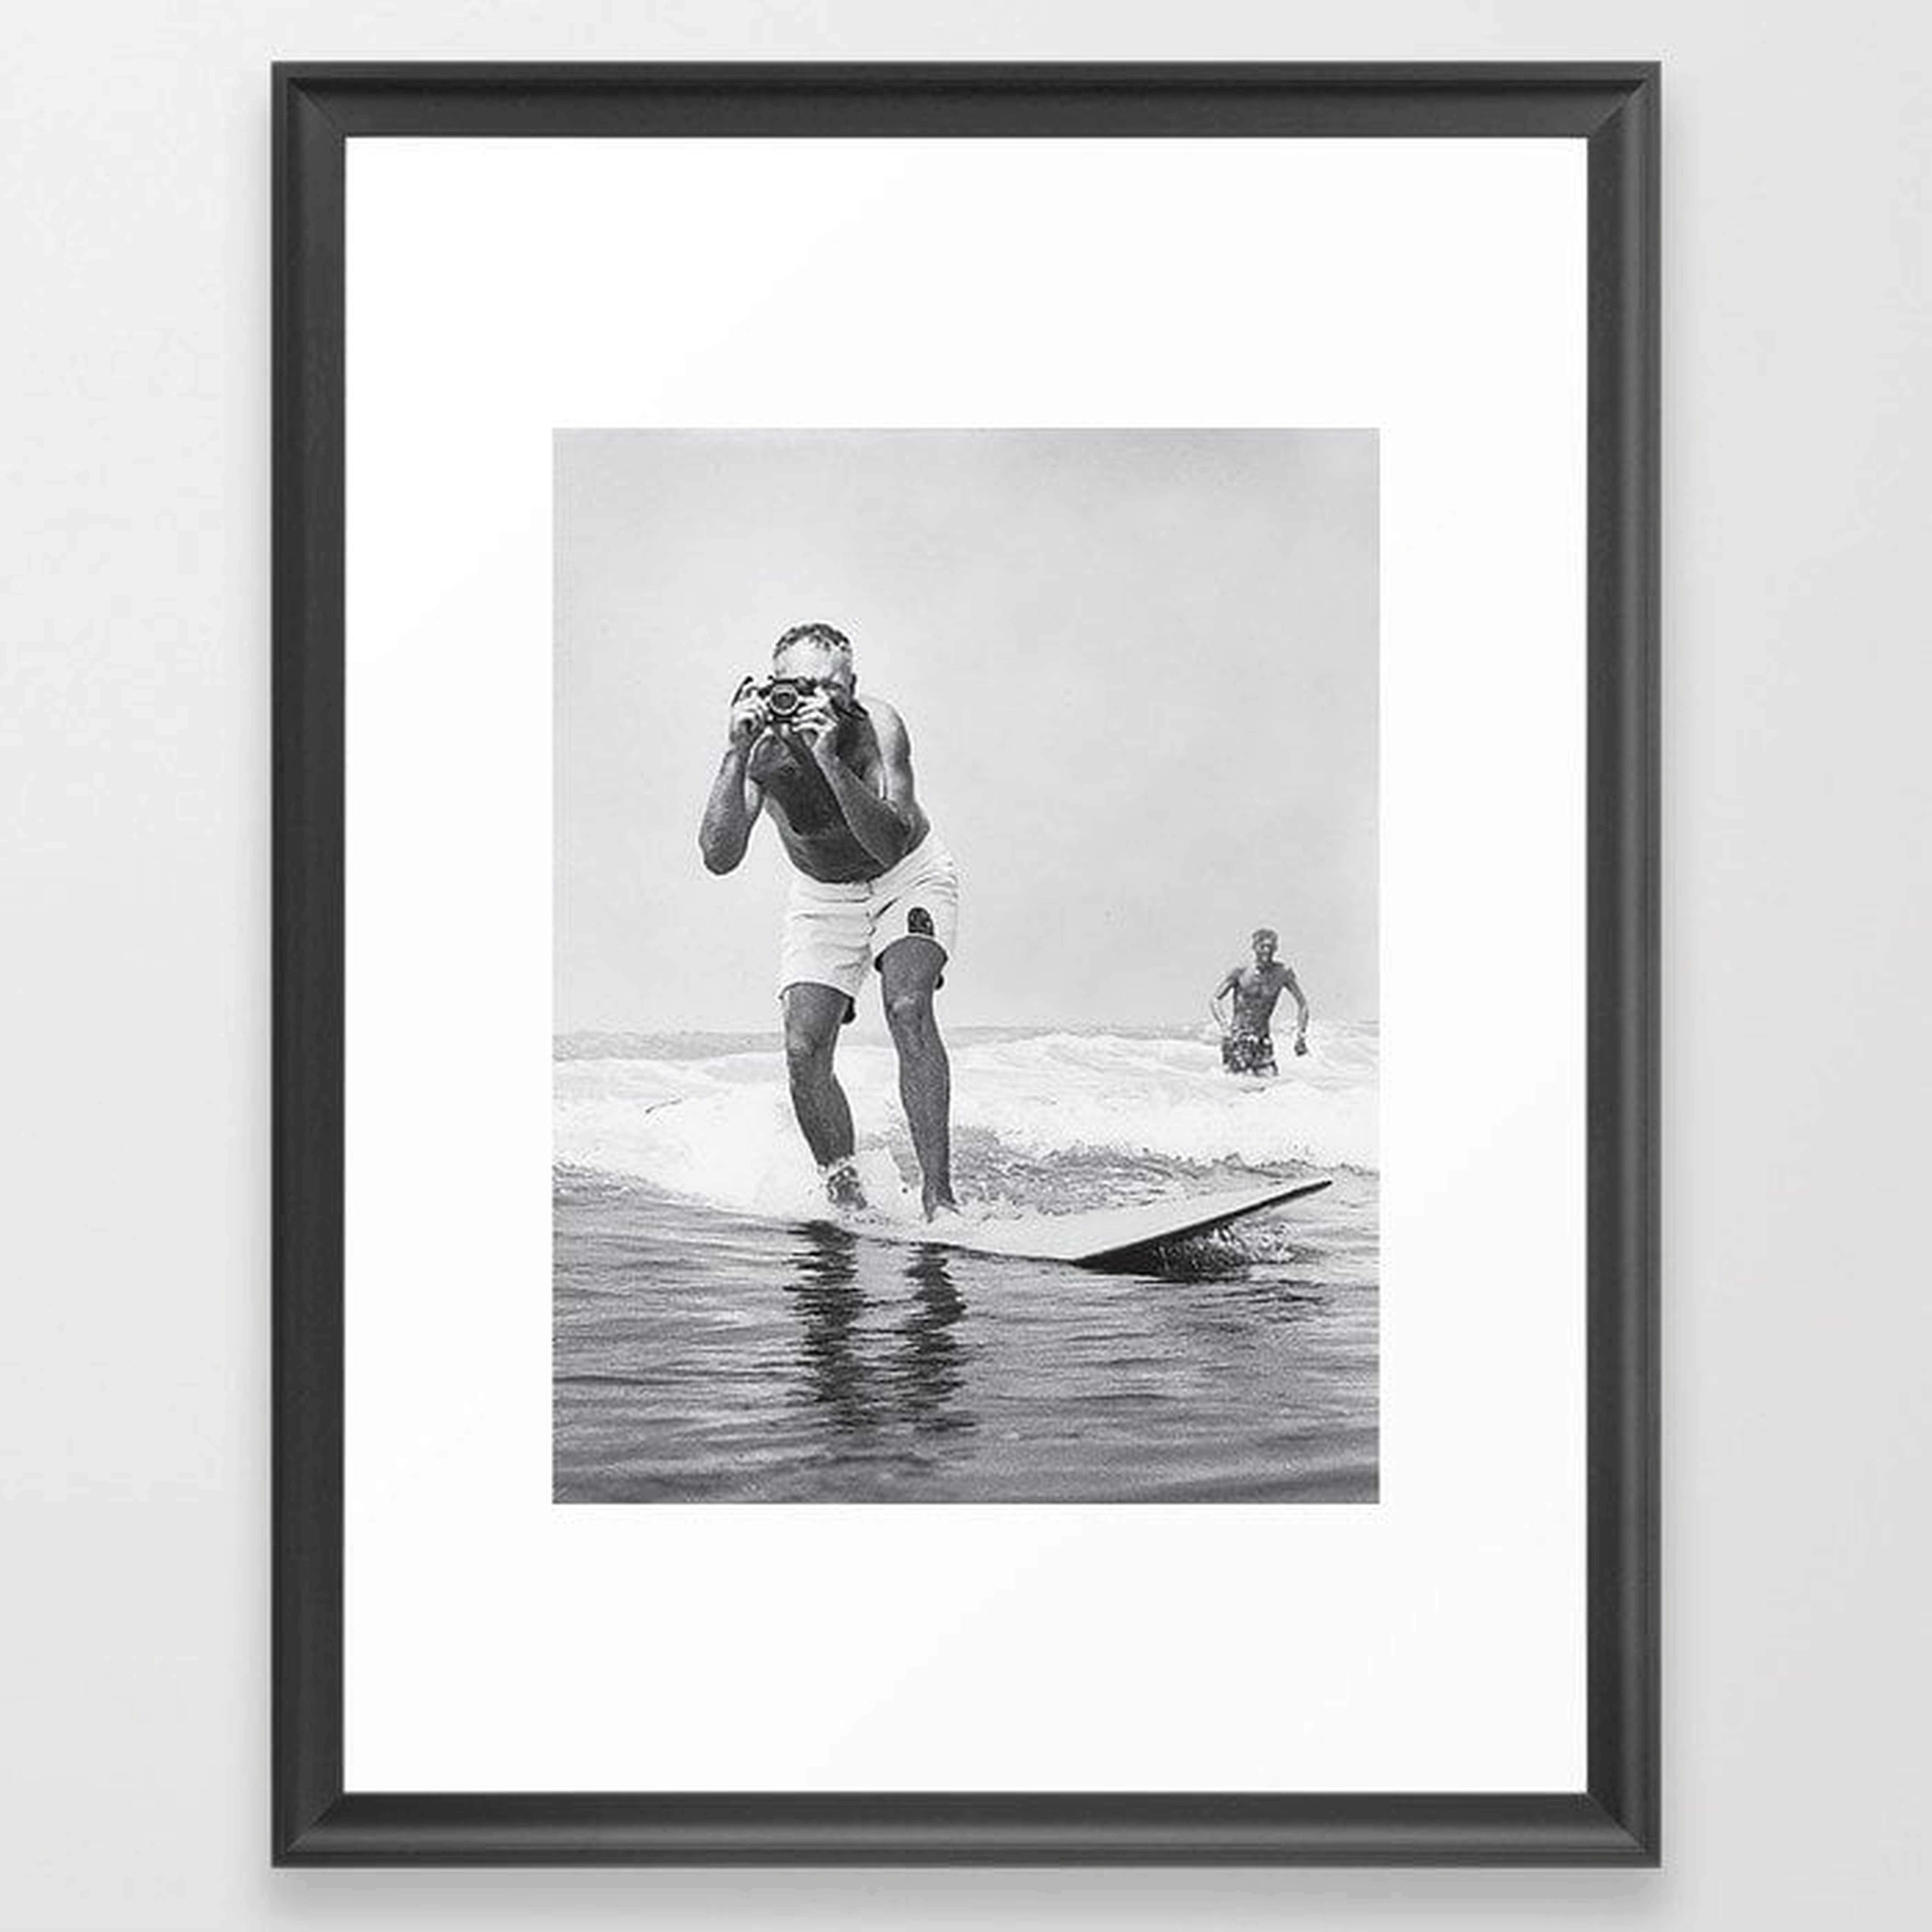 The Surfing Photographer Framed Art Print - Society6